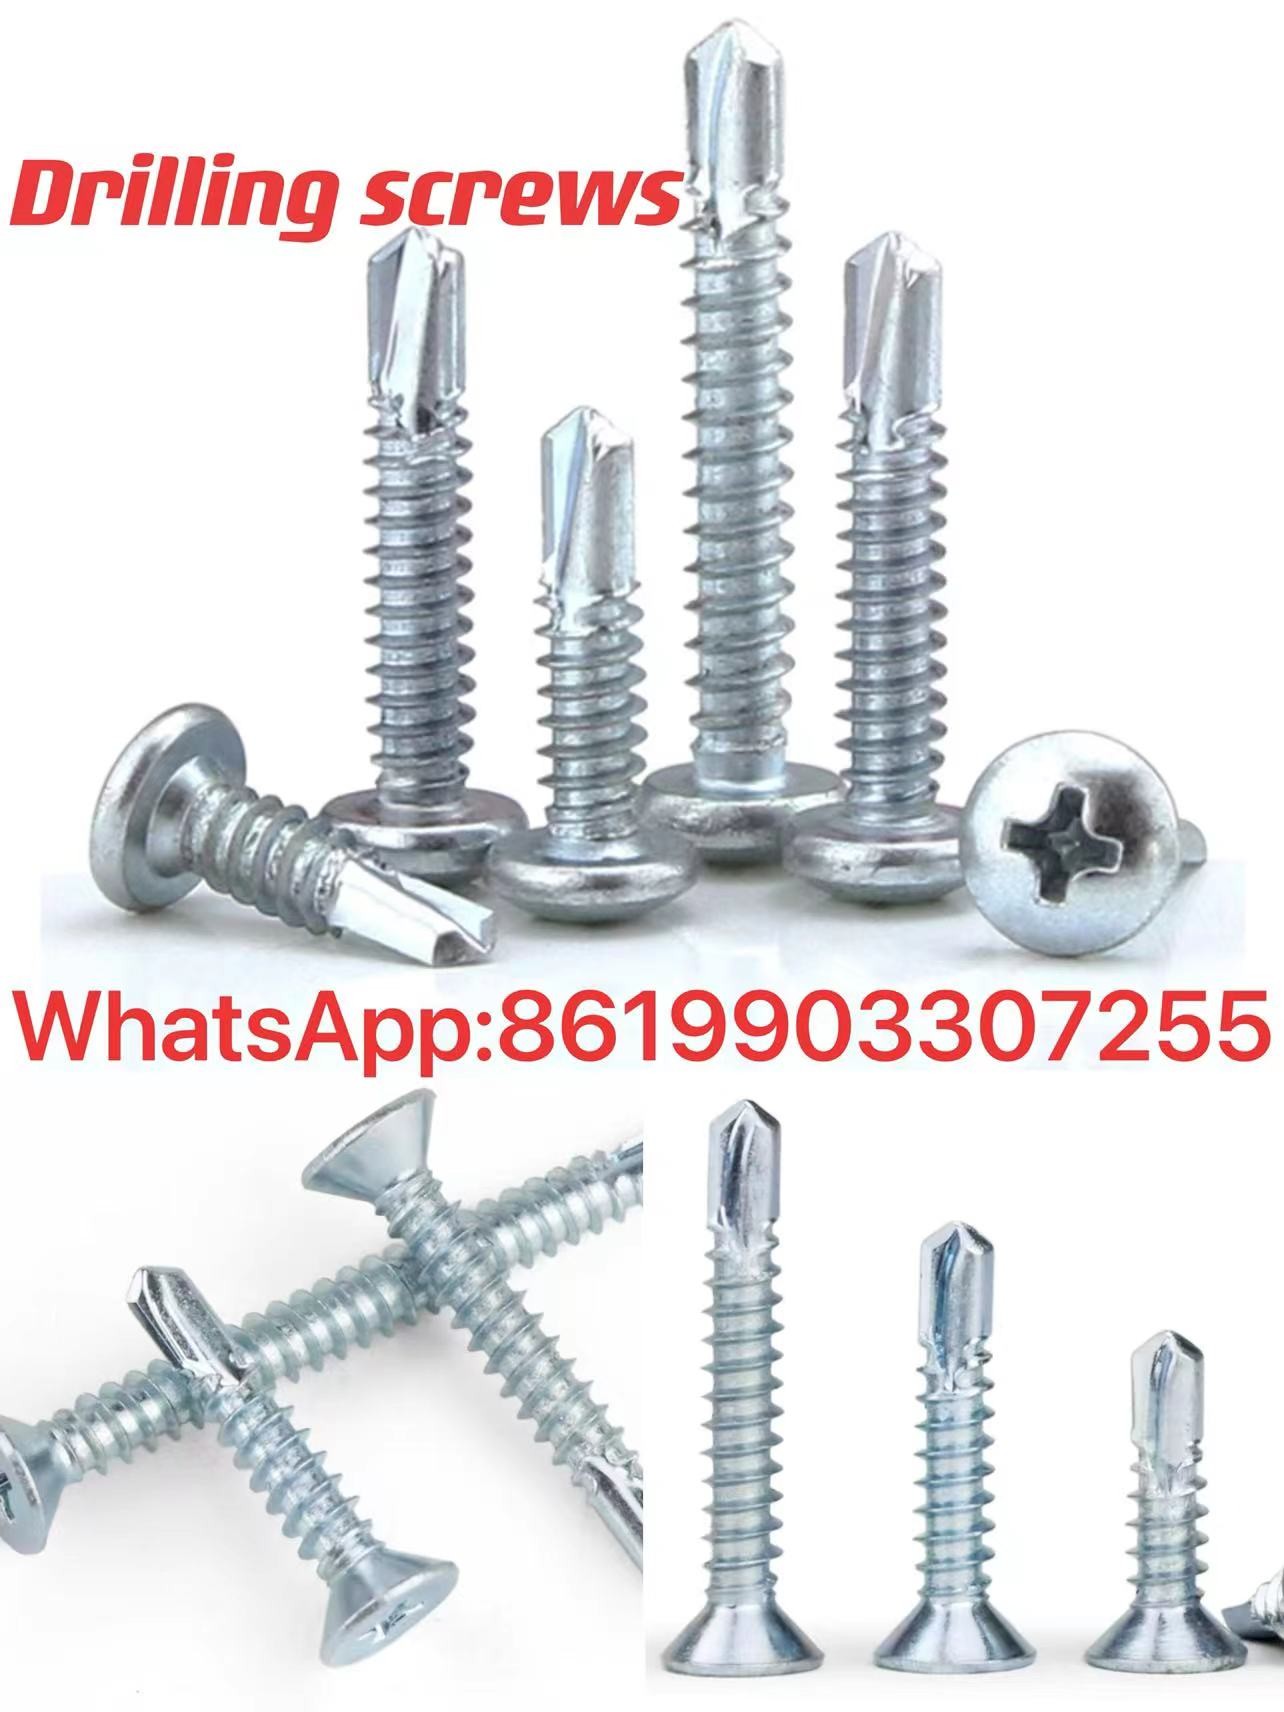 factory sales drillling screws WhatsApp:8619903307255